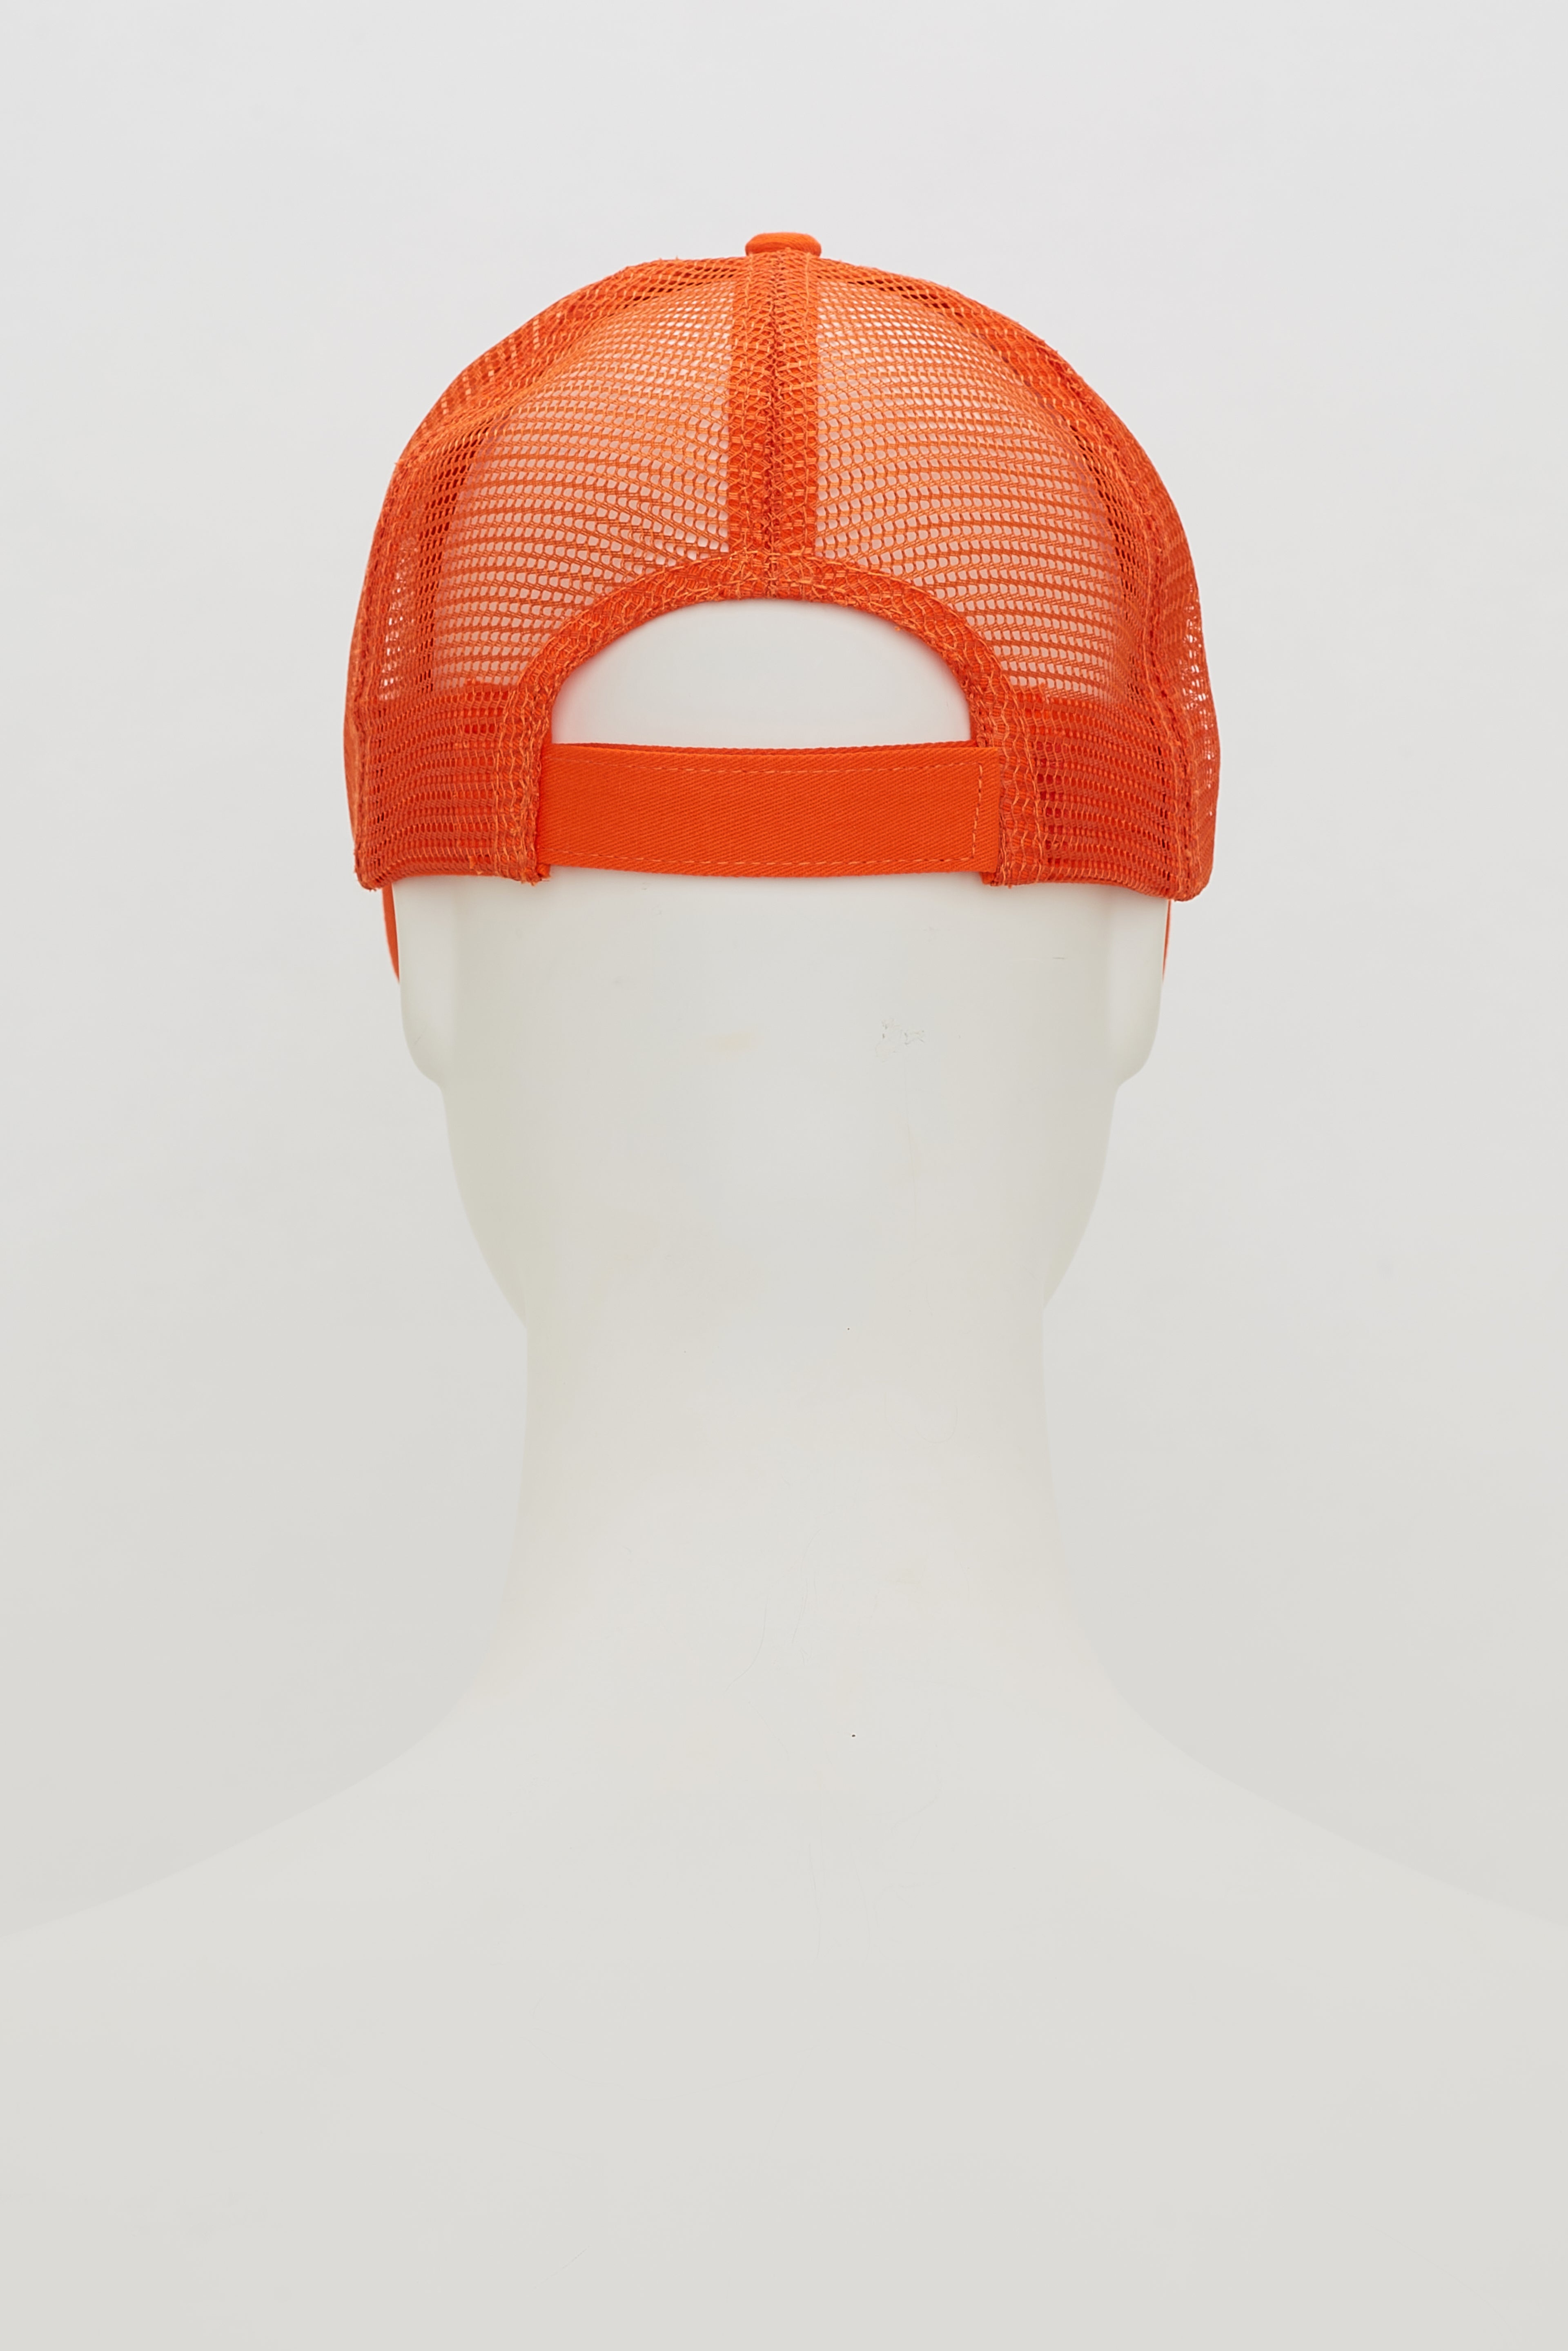 Dorothee-Schumacher-OUTLET-SALE-CHIYC-baseball-cap-Accessoires-OS-spiced-orange-4.jpg